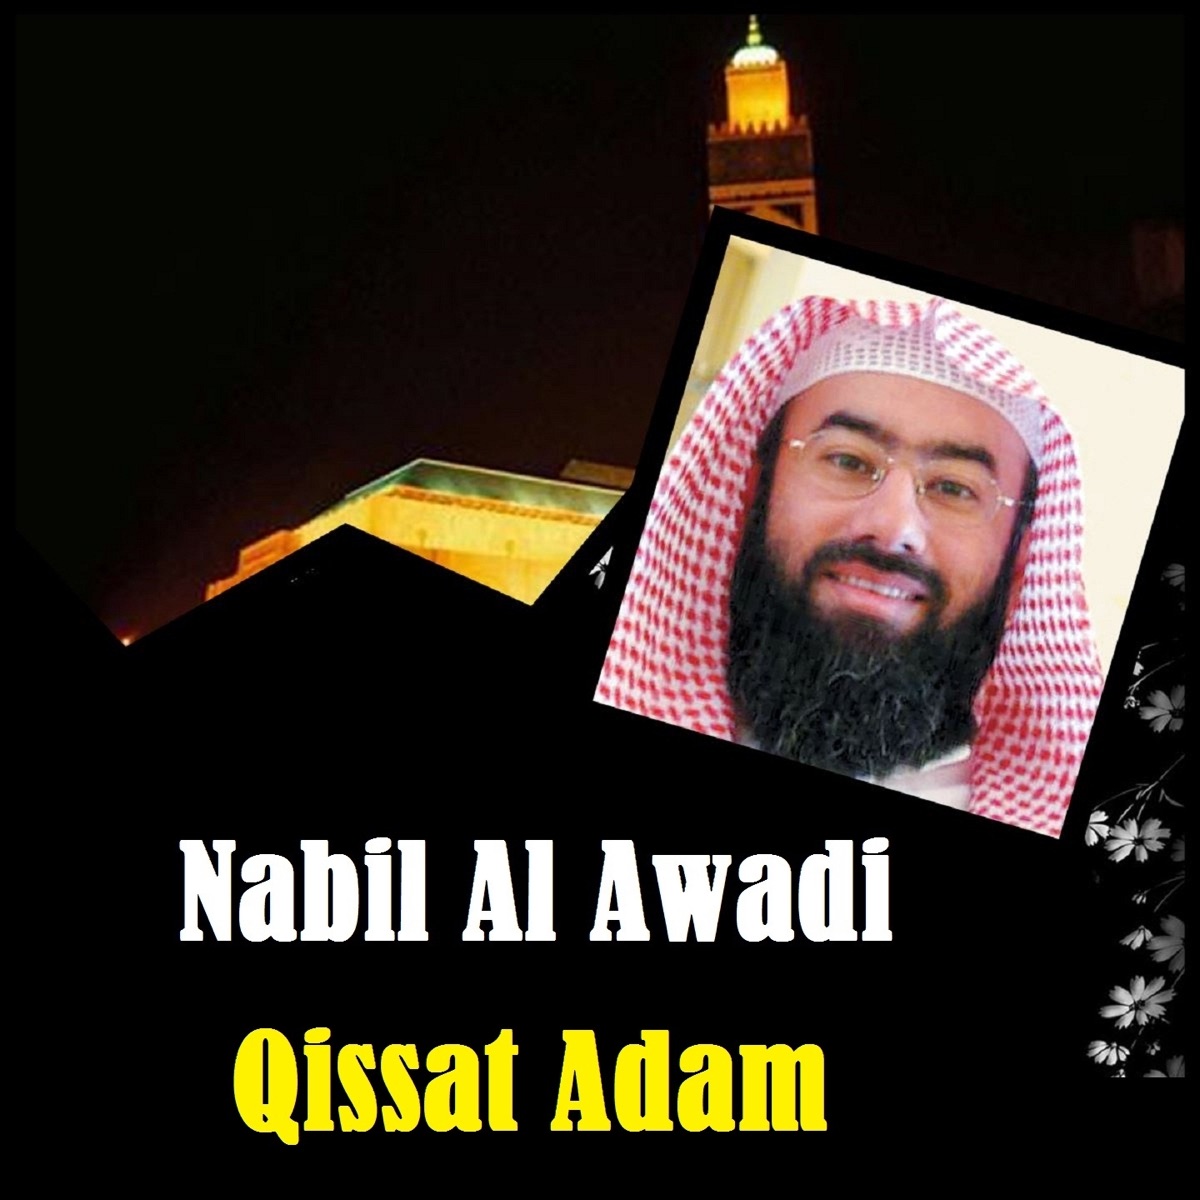 Sira nabawiya - la vie du prophète Saw (Quran - Coran - Islam - Discours -  Dourous) par Nabil Al Awadi sur Apple Music